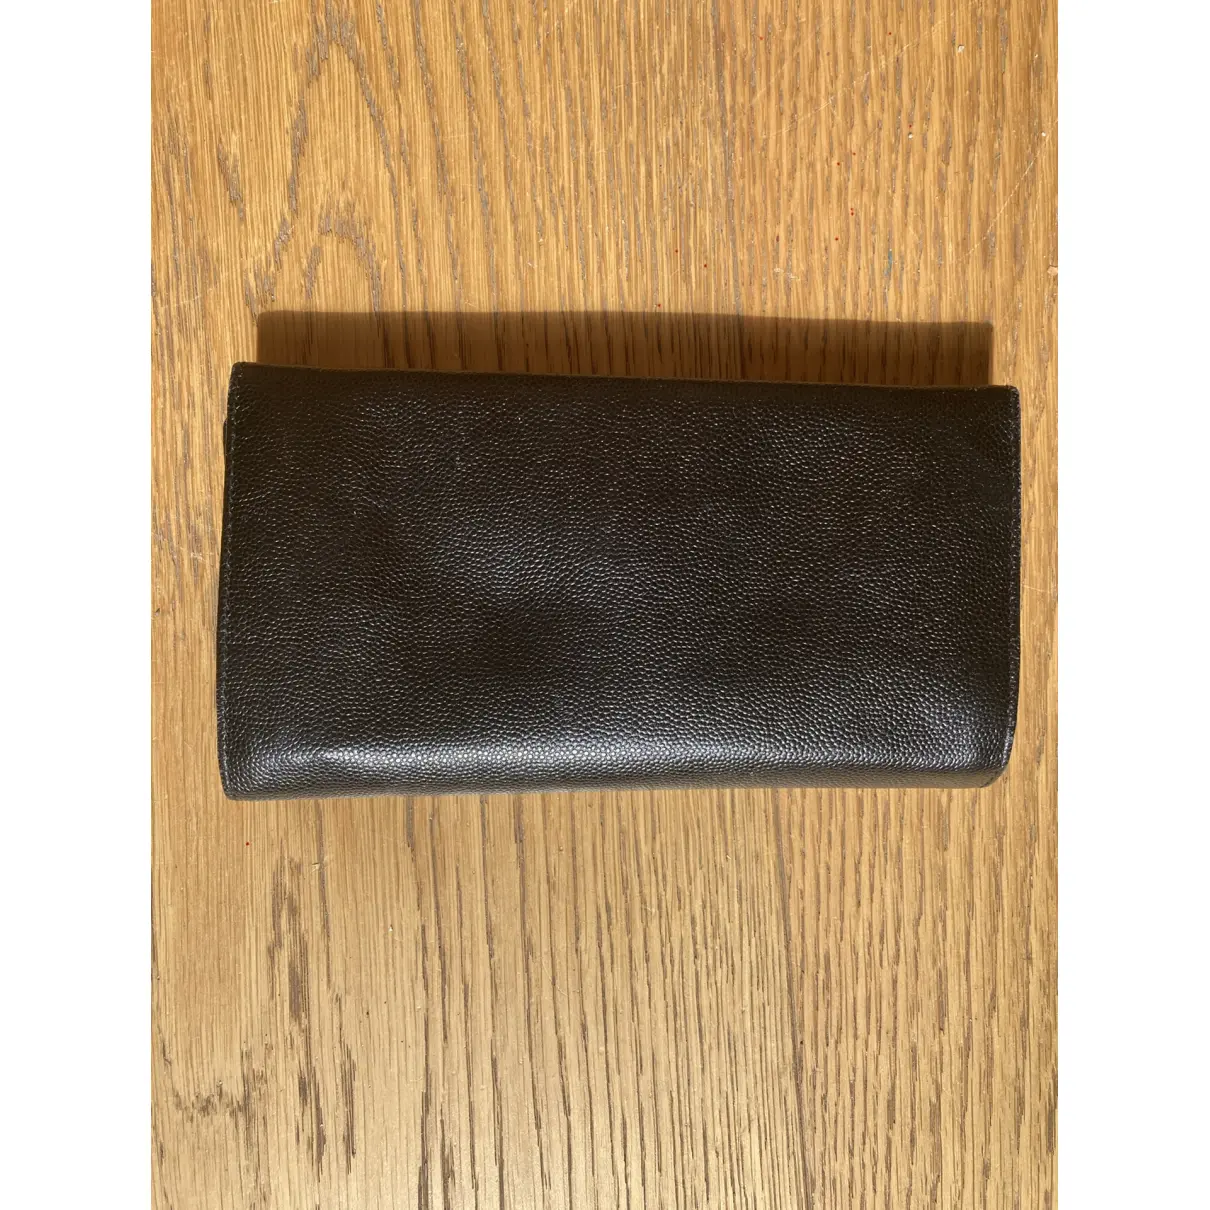 Buy Karl Lagerfeld Leather wallet online